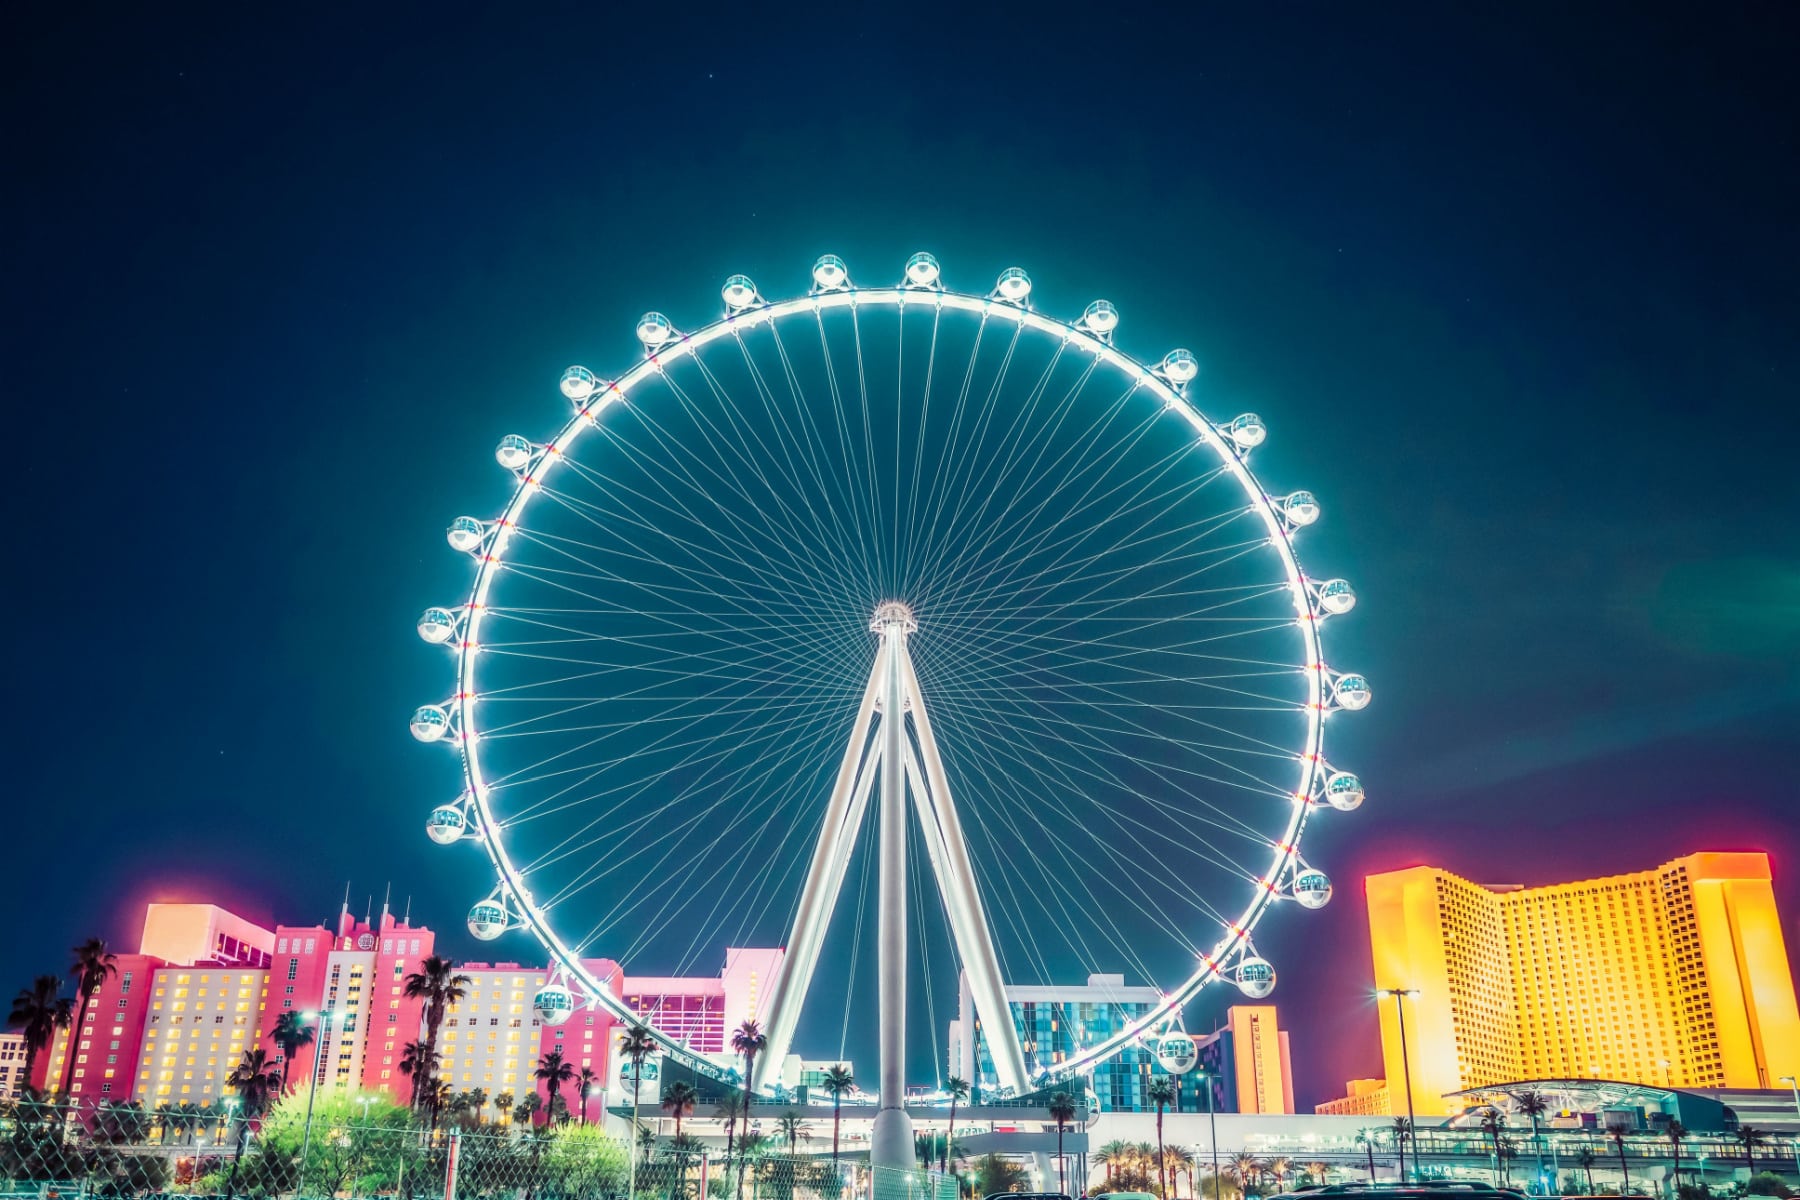 Large Ferris wheel knwon as 'The High Roller" in Las Vegas. 